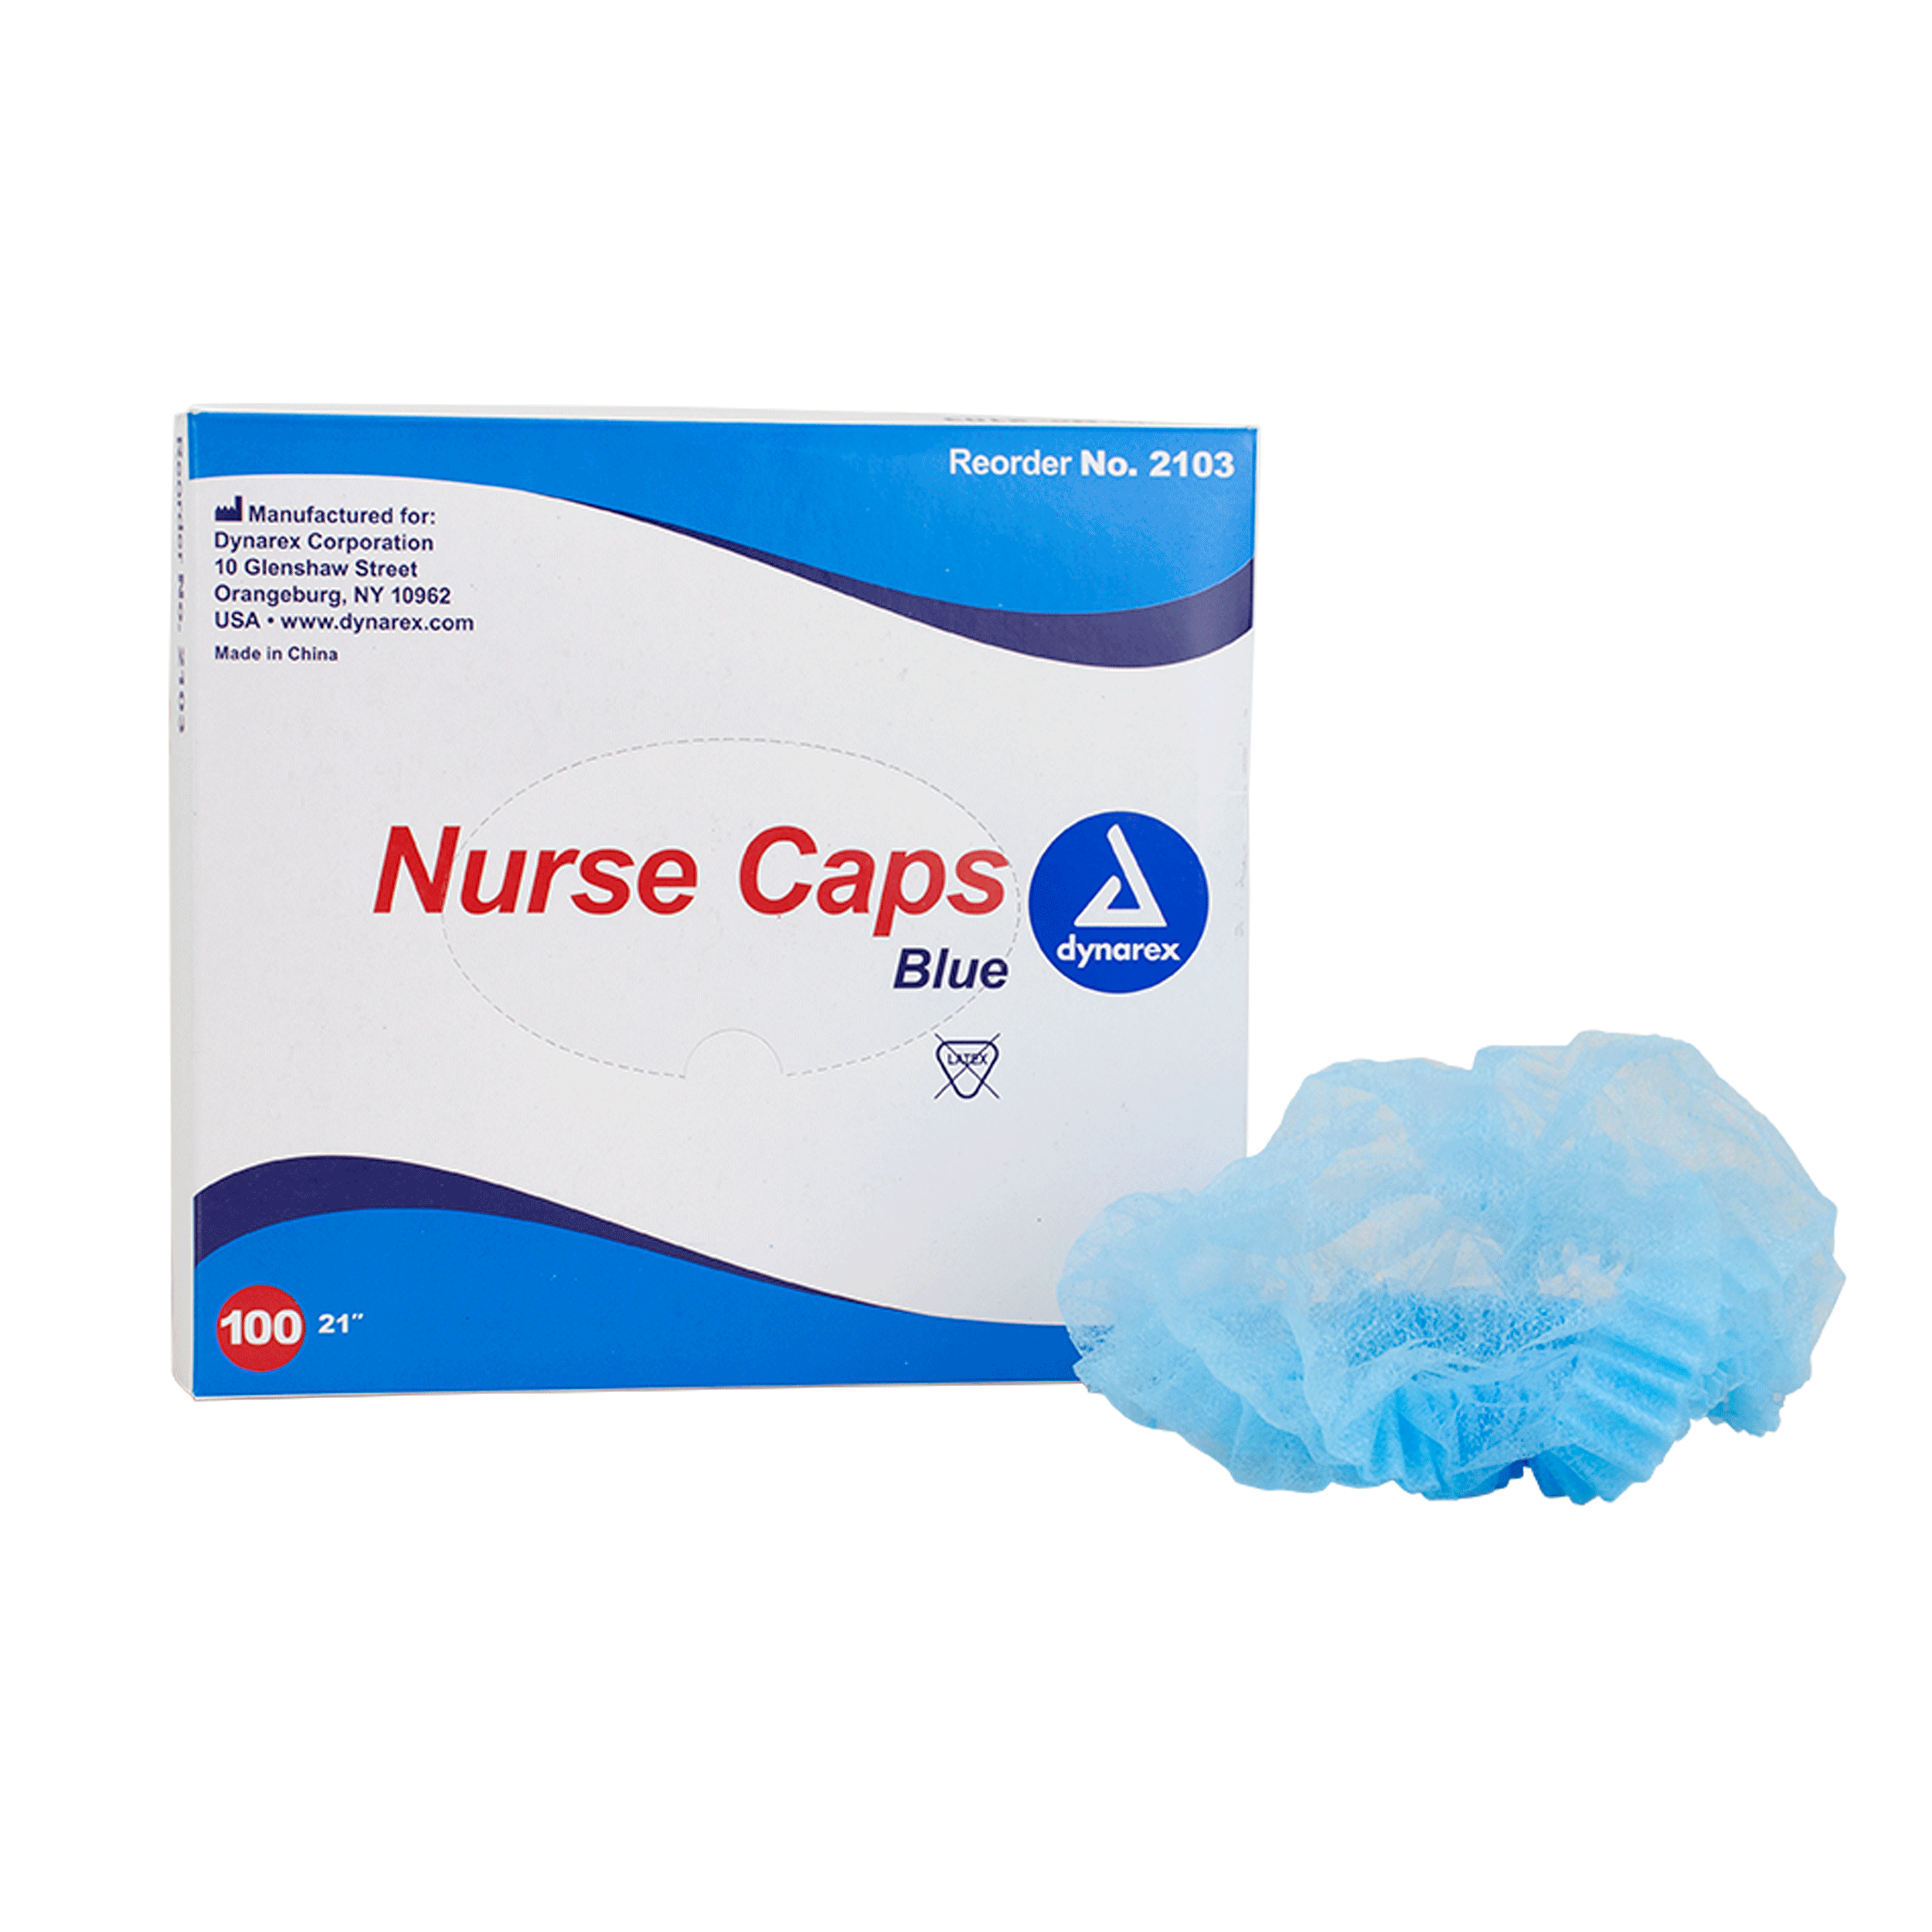 Nurse Cap O.R. 21″, Blue